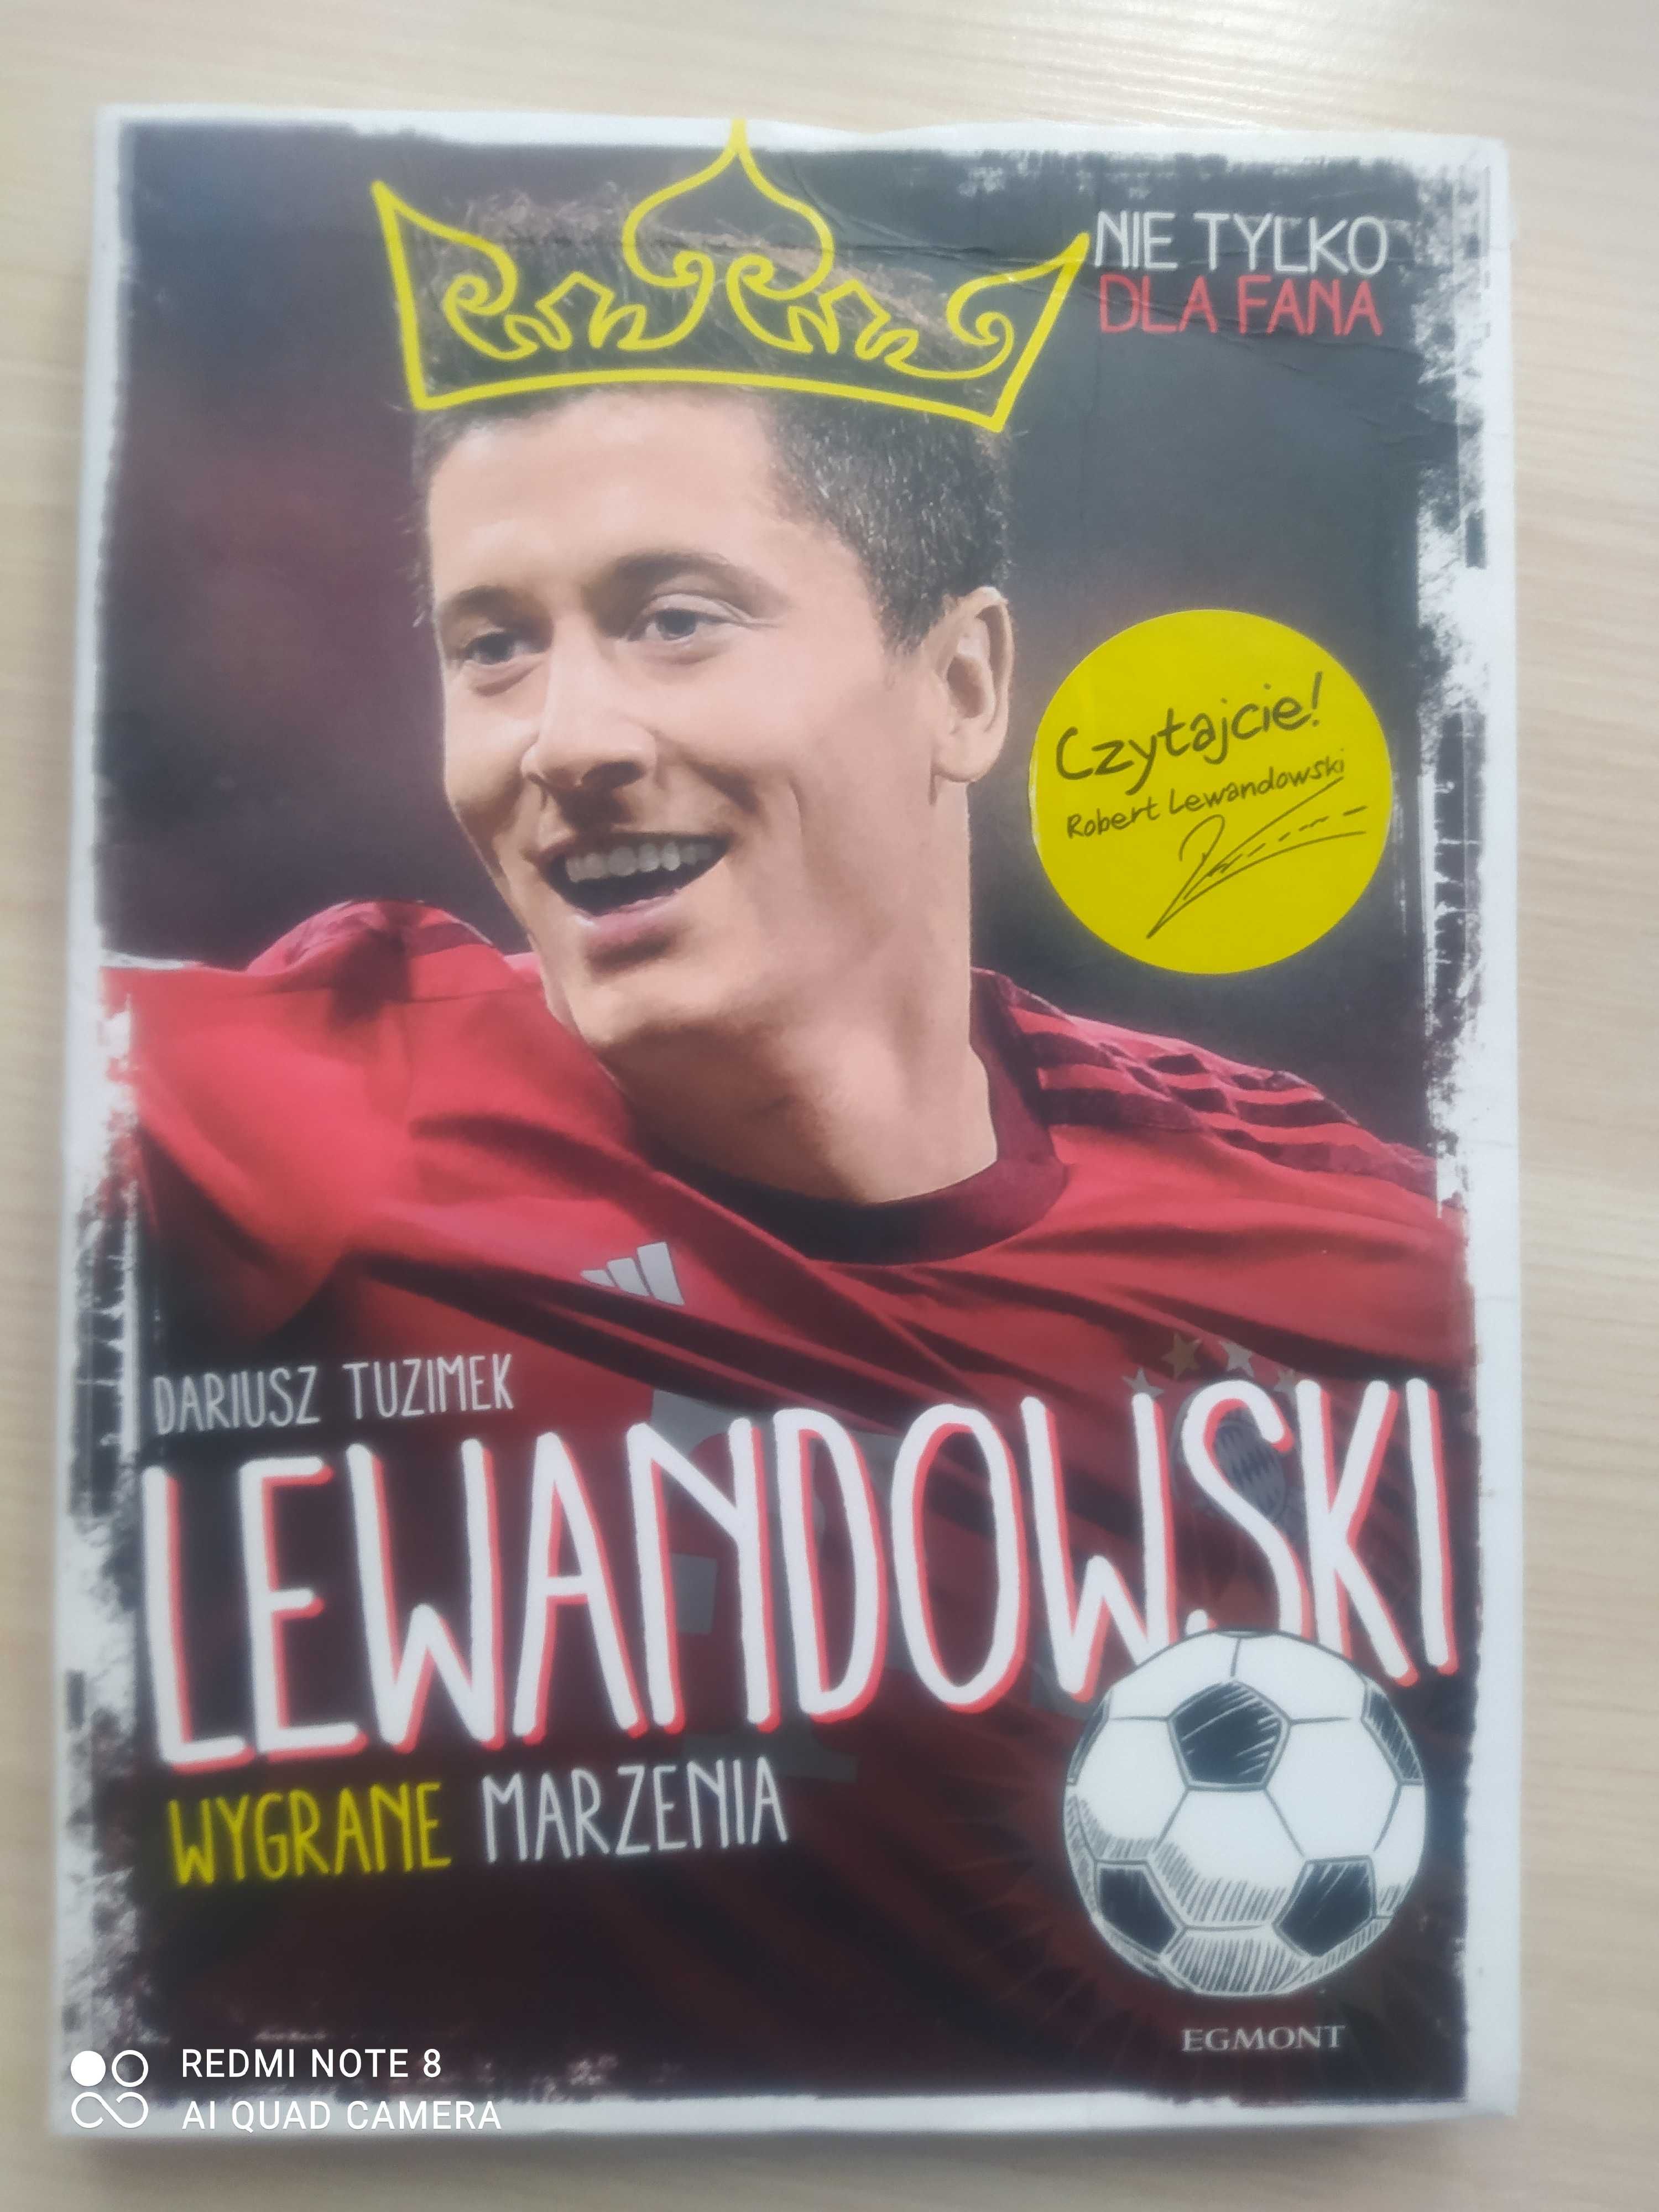 Książka Dariusza Tuzimka "Lewandowski"